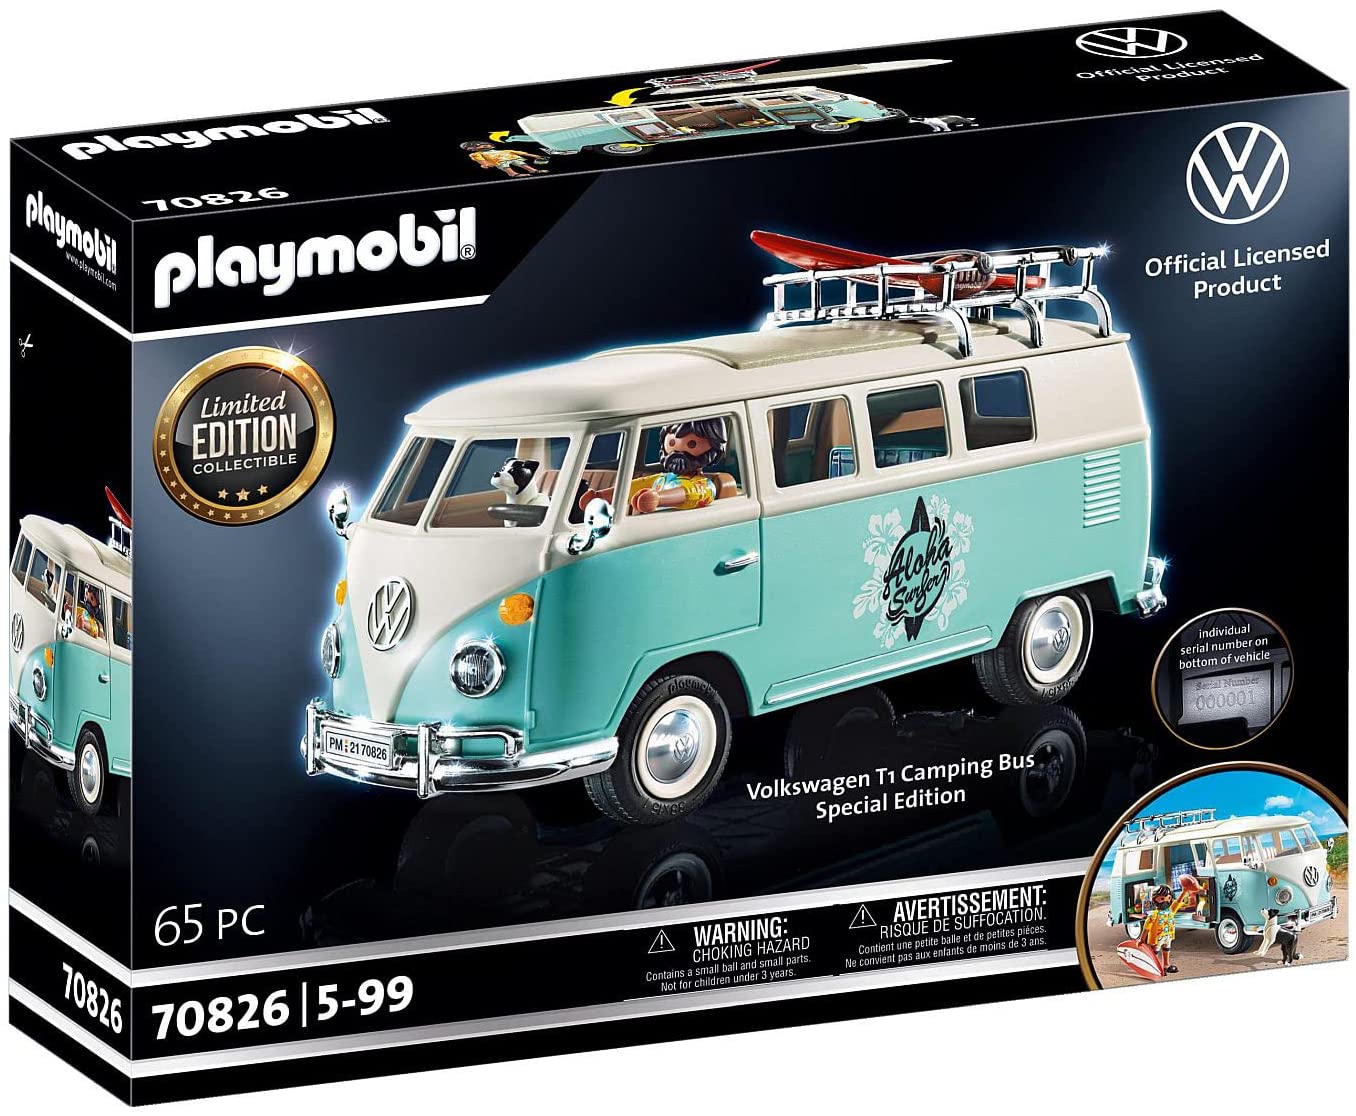 PLAYMOBIL 70826 Volkswagen T1 Camping Bus as Light Blue Surfer Van, Special